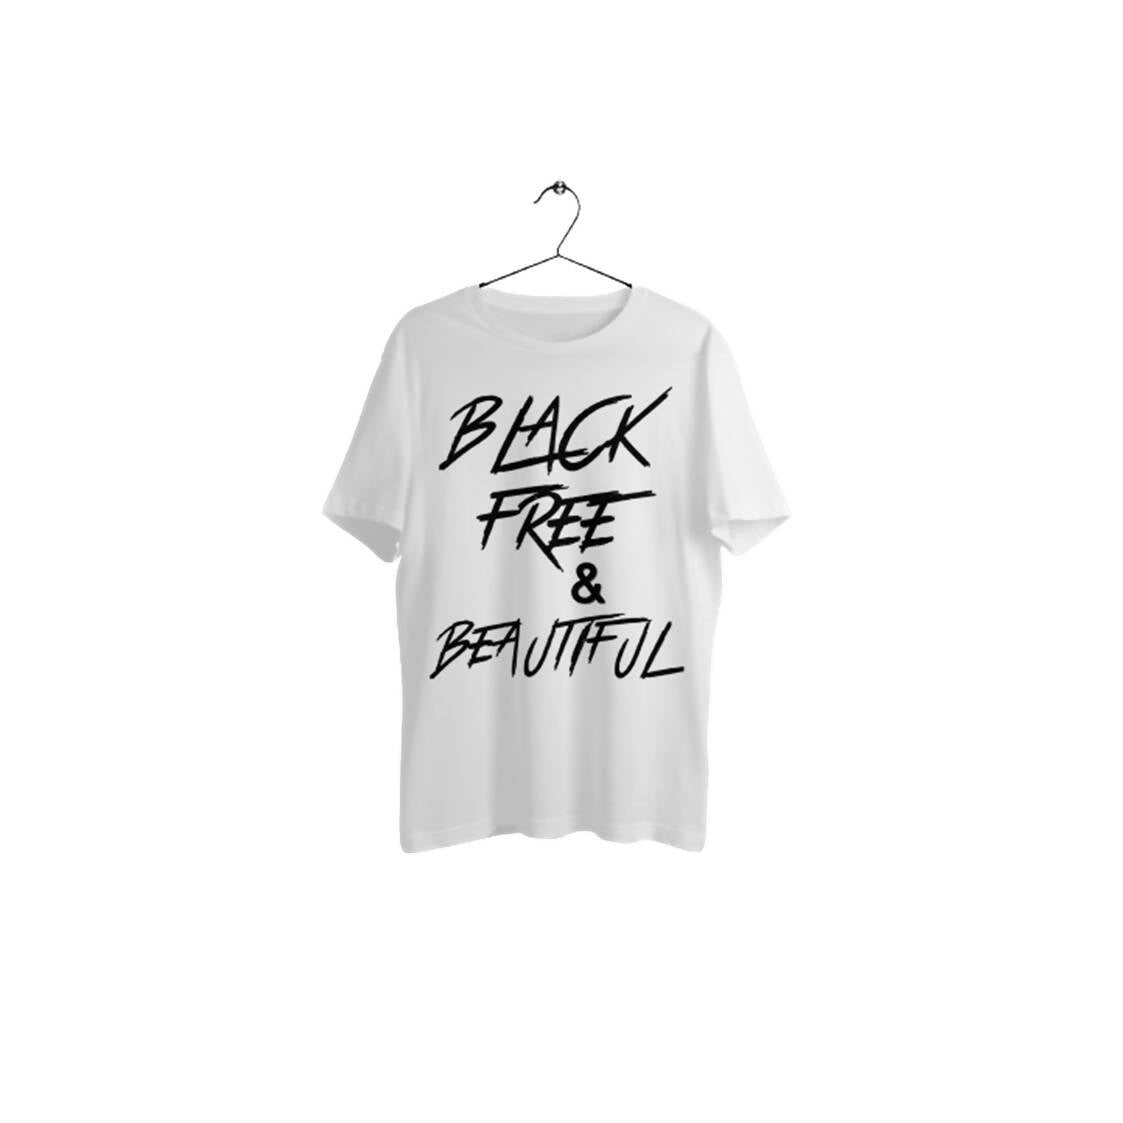 black, free & beautiful t-shirt